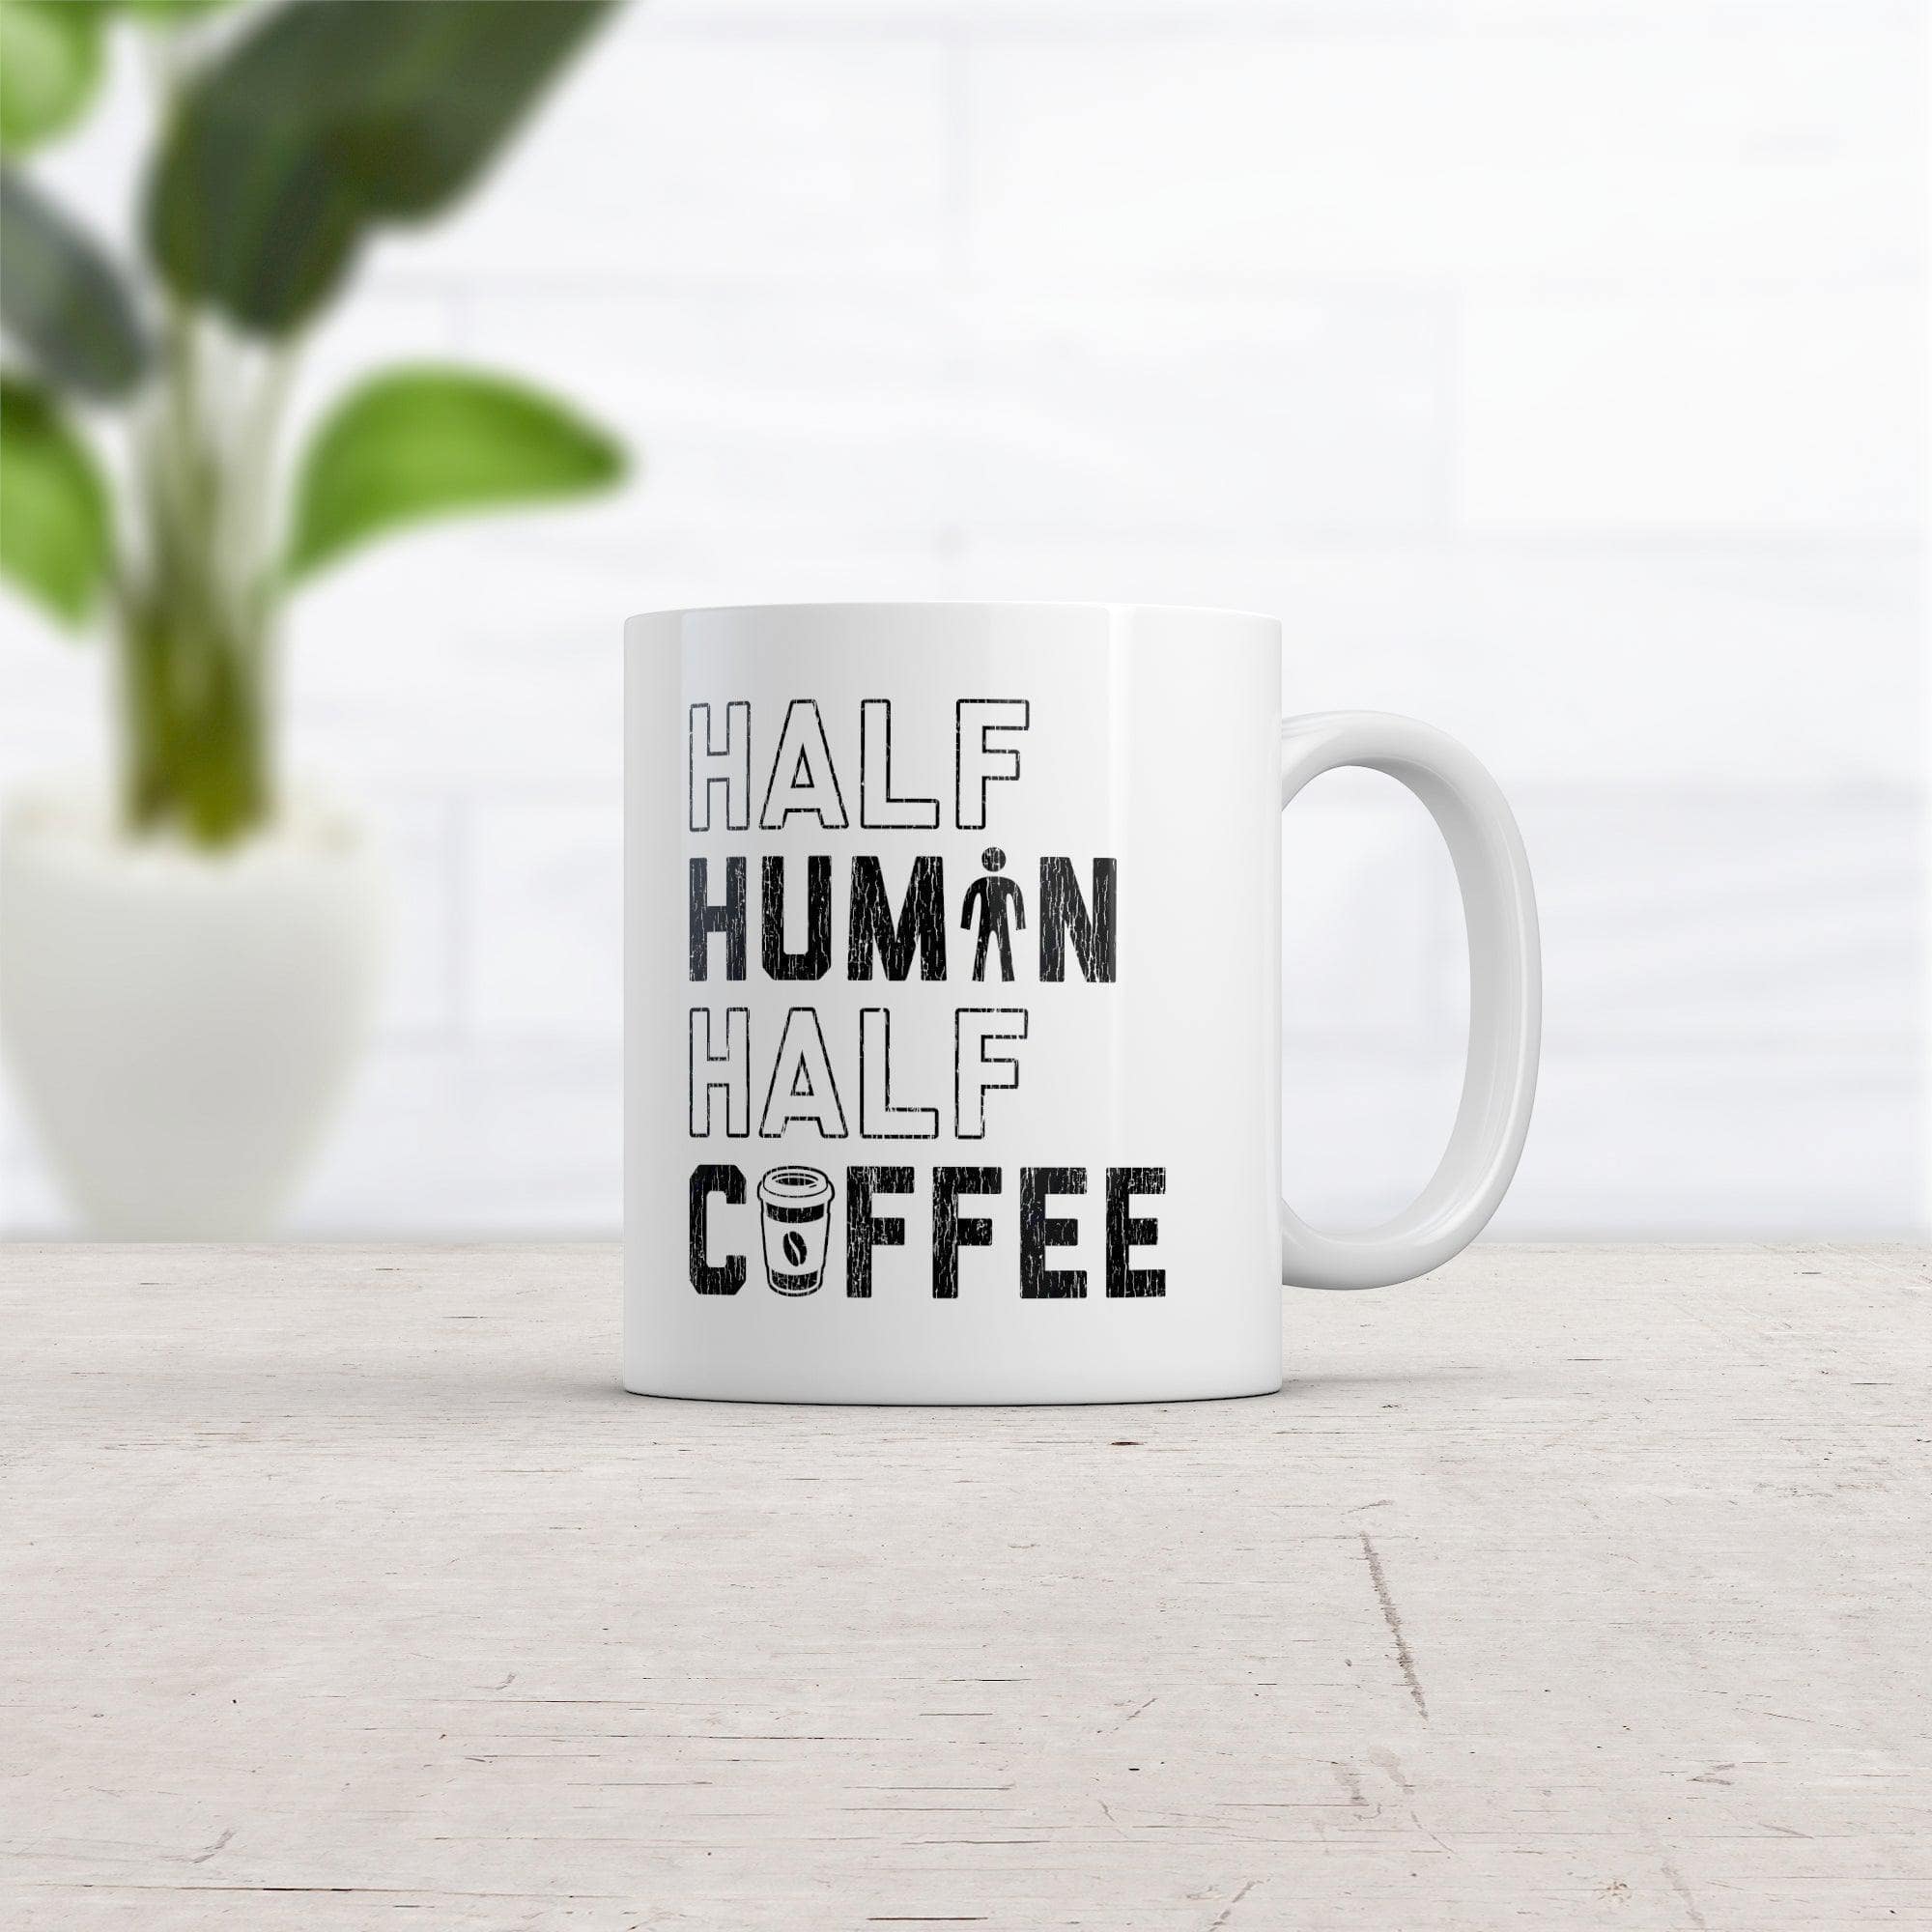 Half Human Half Coffee Mug Funny Caffeine Addict Morning Person Novelty Cup-11oz  -  Crazy Dog T-Shirts